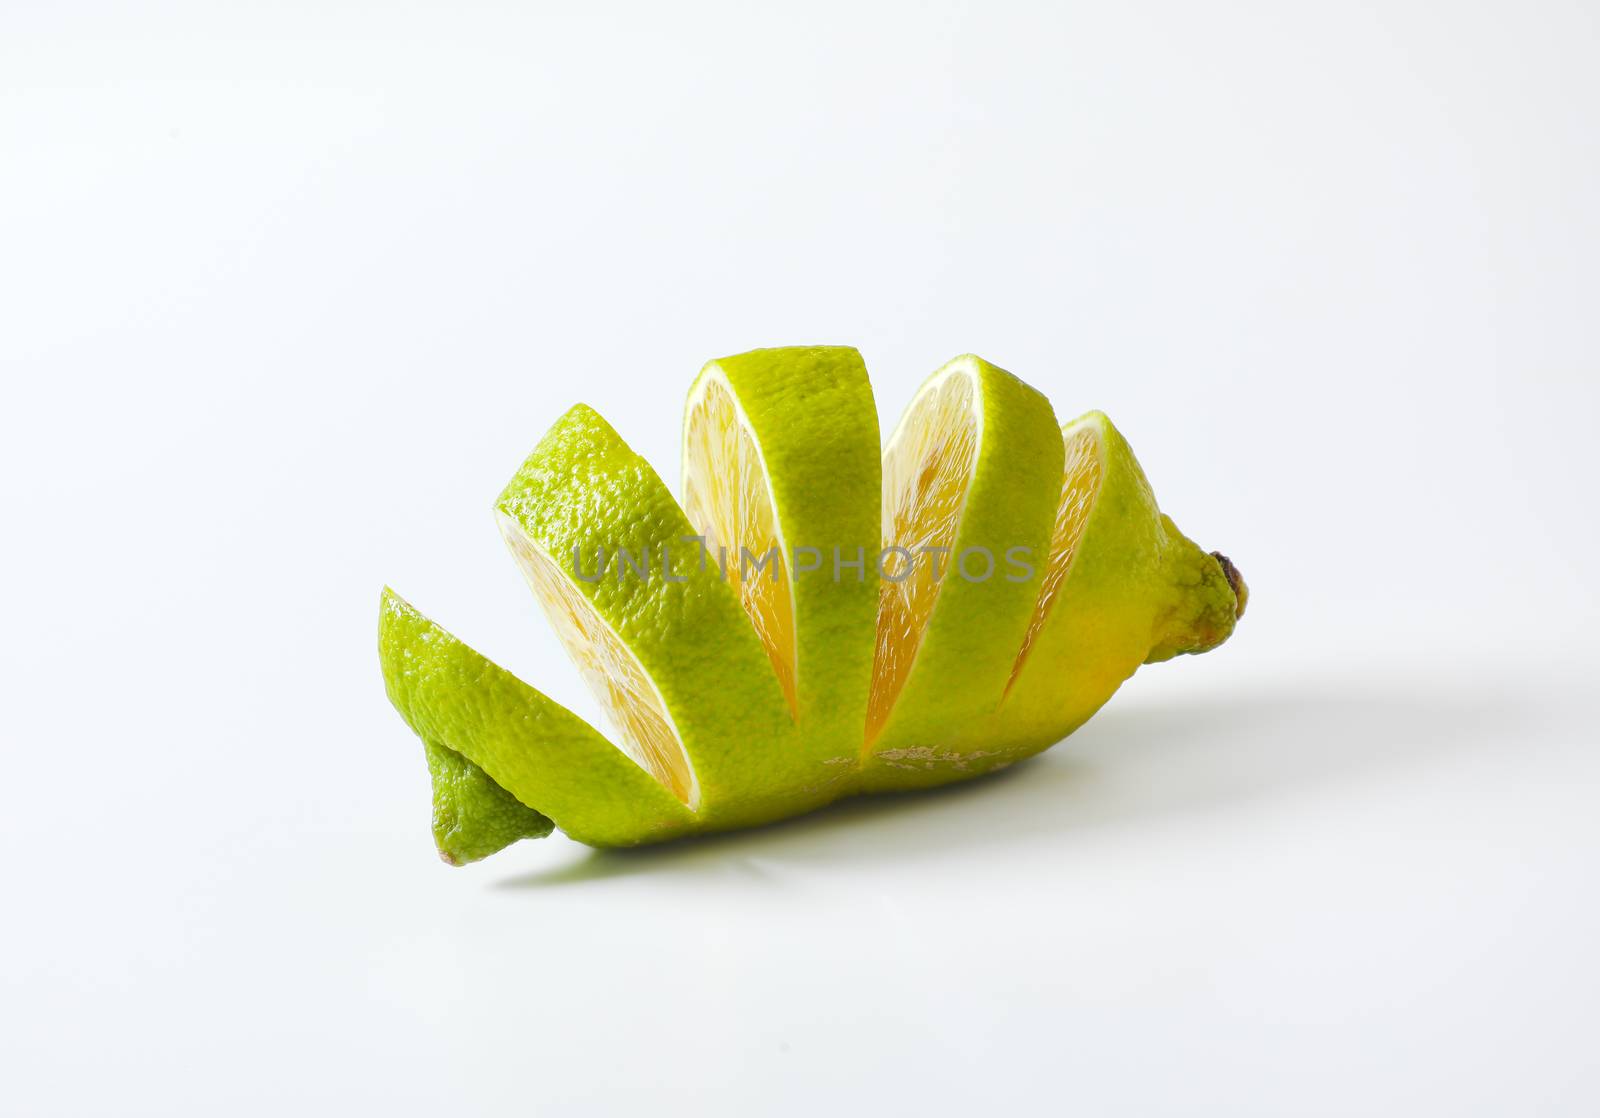 Lemon with green peel and yellow flesh, sliced